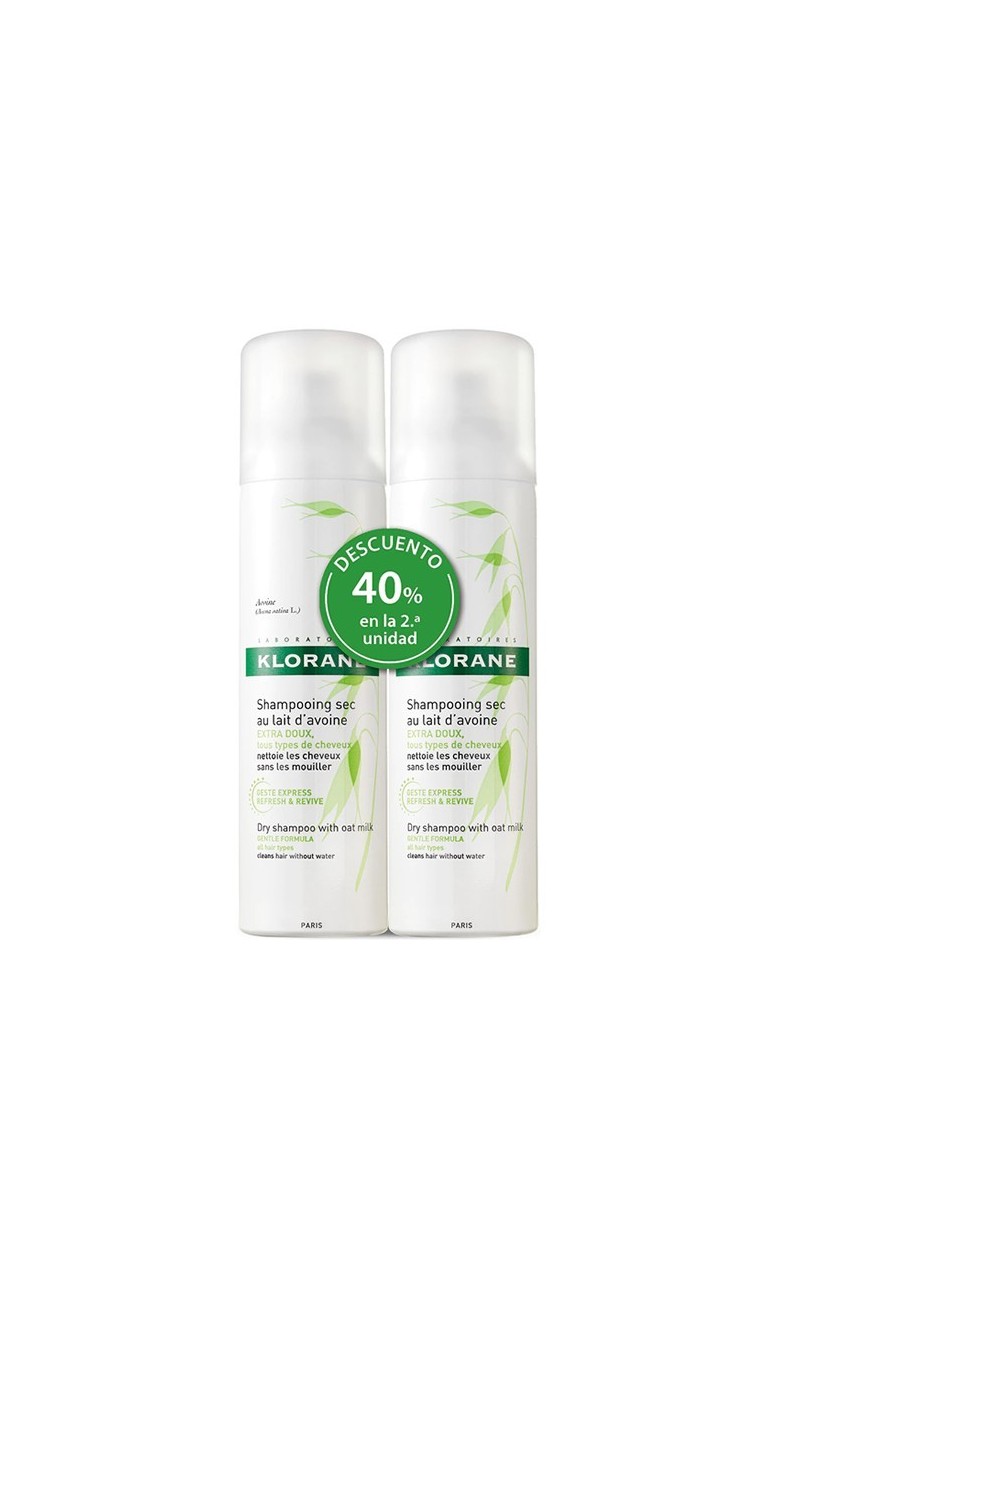 Klorane Ultra Gentle Dry Shampoo Oat Extract 2x150 ml